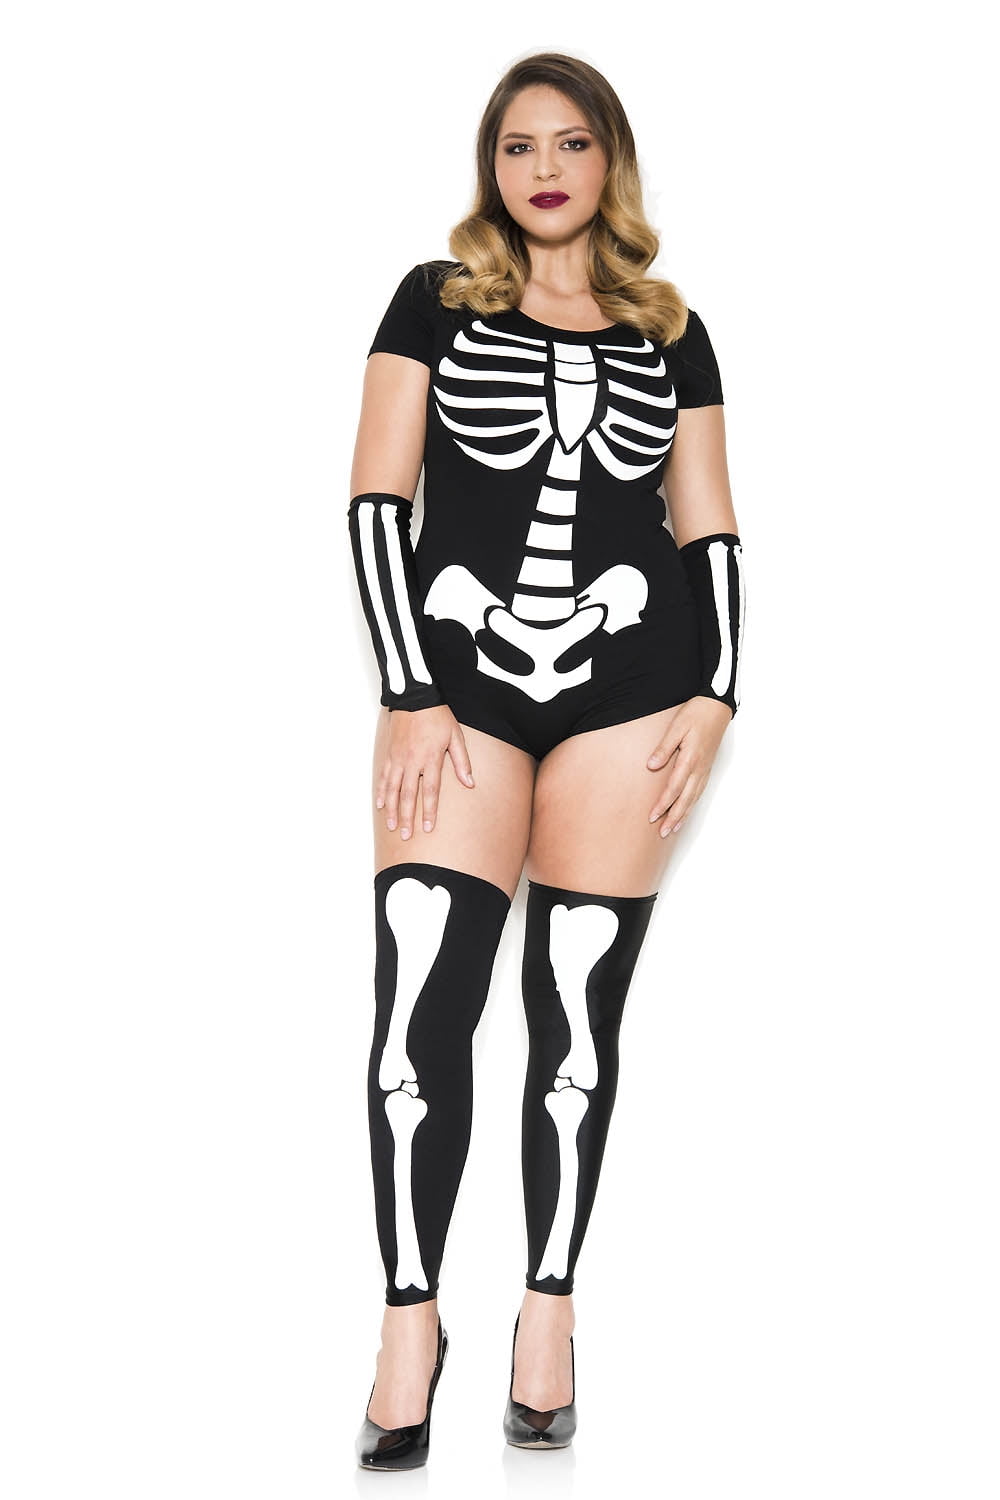 Den sandsynlige Autonomi Sikker Plus Size Sultry Skeleton Costume 71005Q-1X/2X - Walmart.com